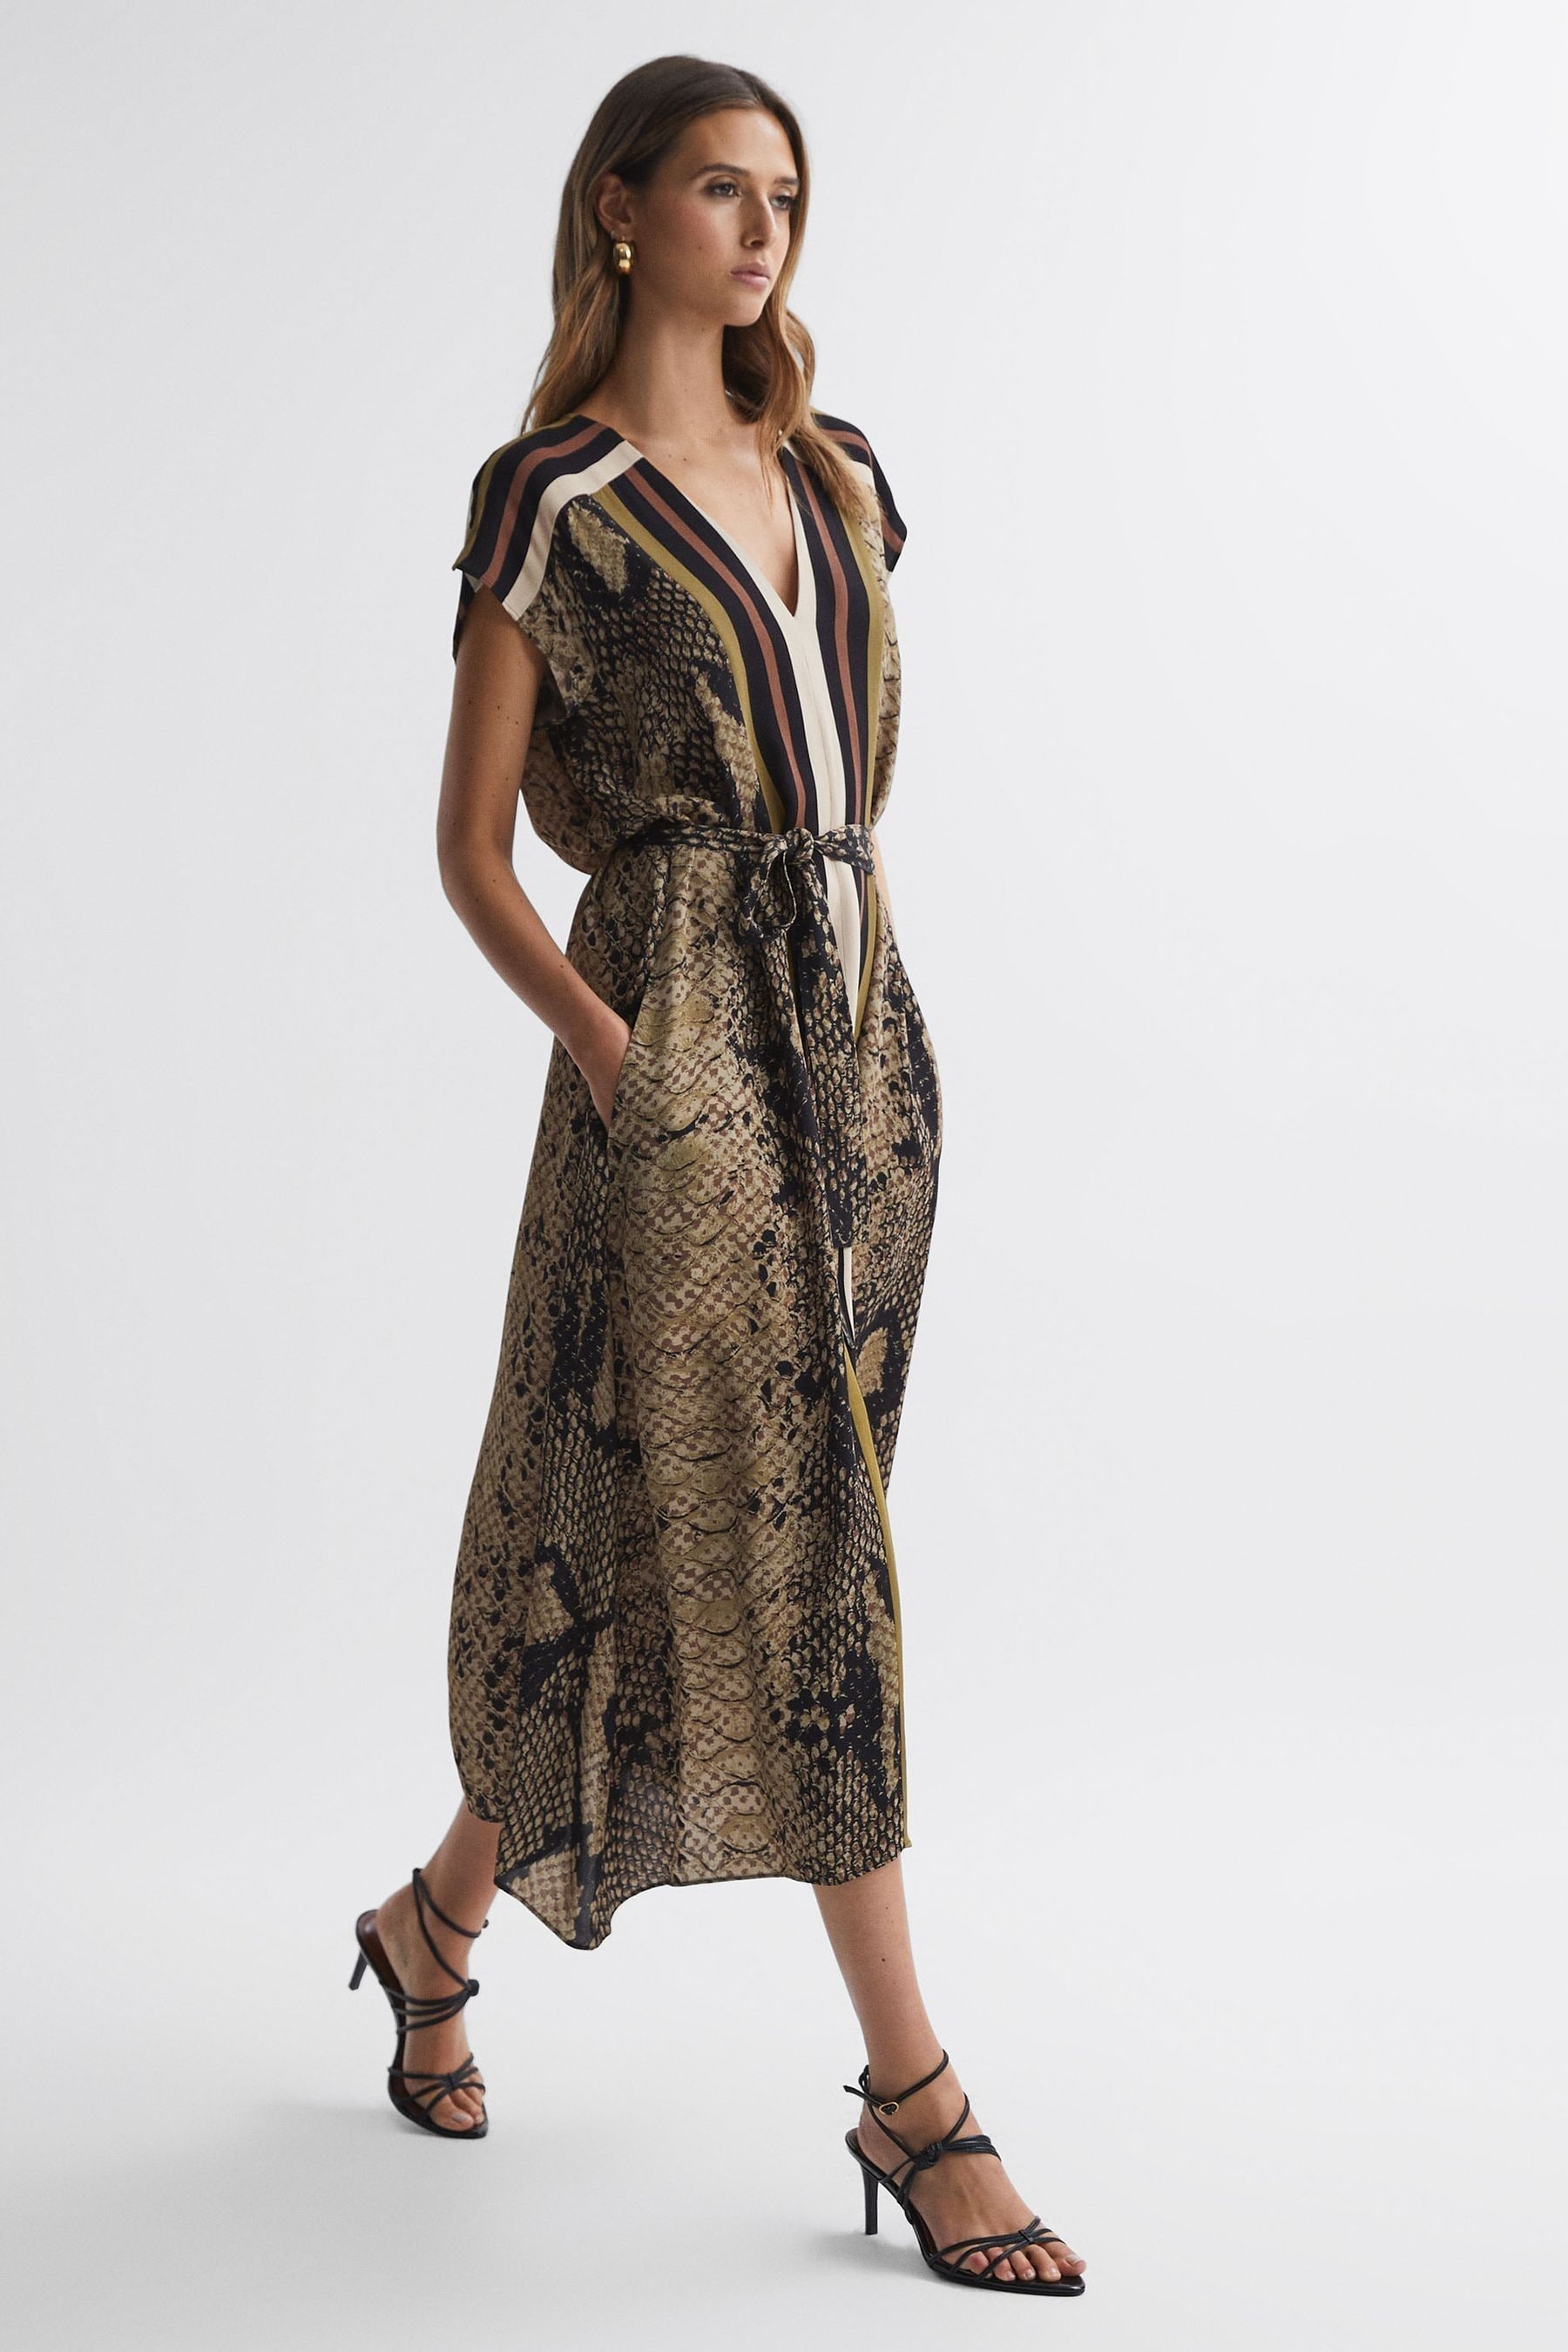 Reiss Bea - Brown Snake Print Midi Dress, Us 2